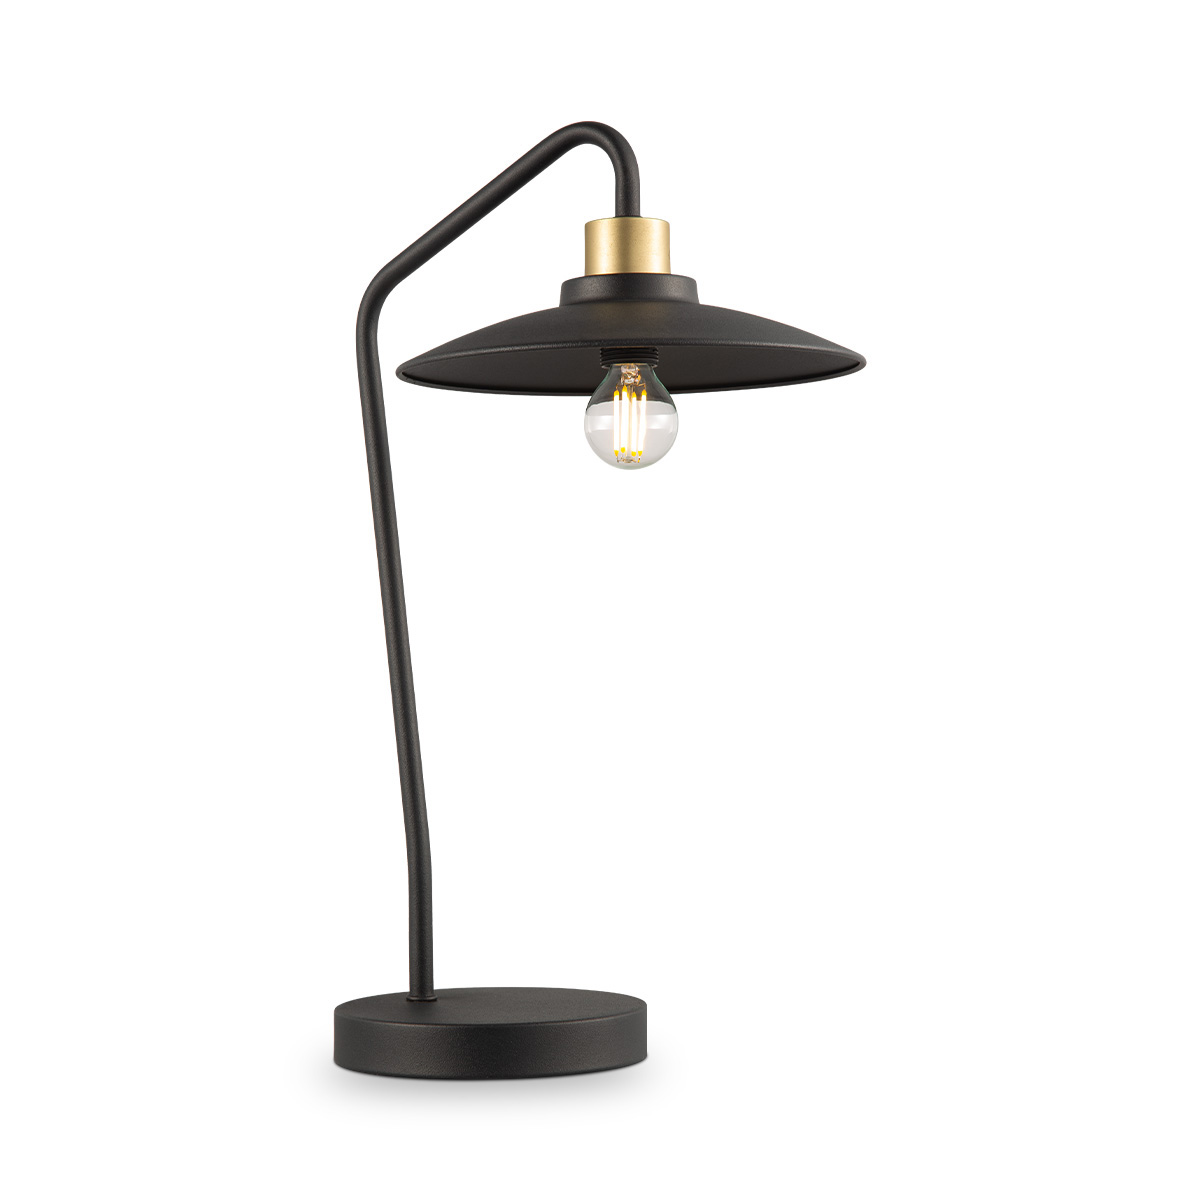 Tangla lighting - TLT7655-01SB - LED table lamp 1 light - metal decorative lighting - modern - black cirque series